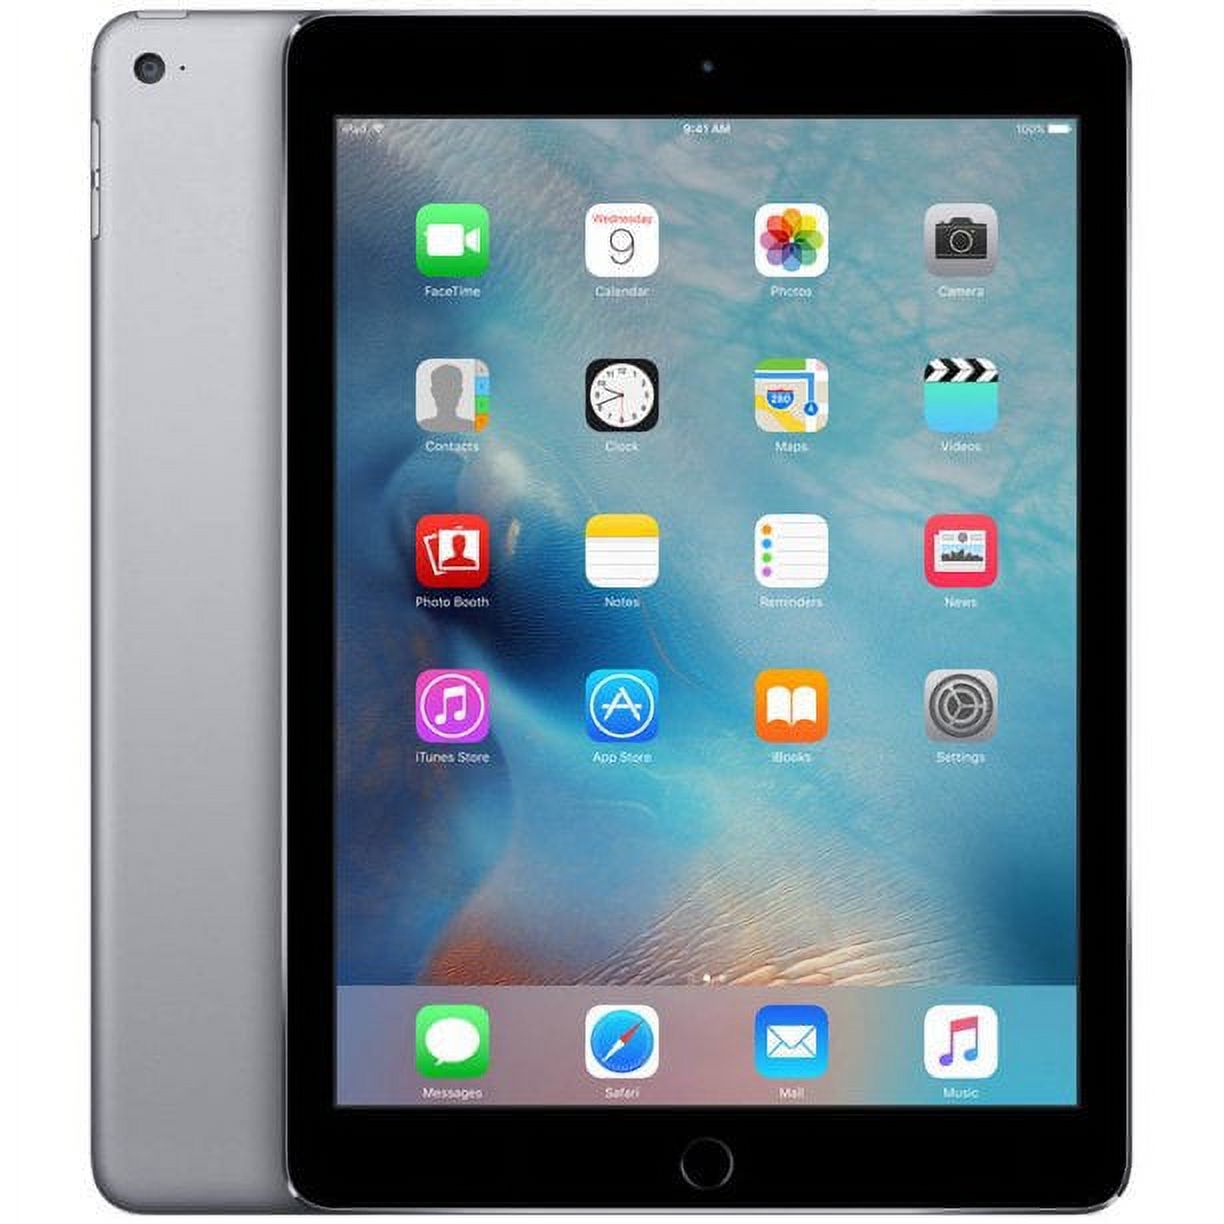 Restored Apple iPad Air 2 16GB WiFi 2GB iOS 10 9.7" Tablet - Space Gray (Refurbished) - image 1 of 4